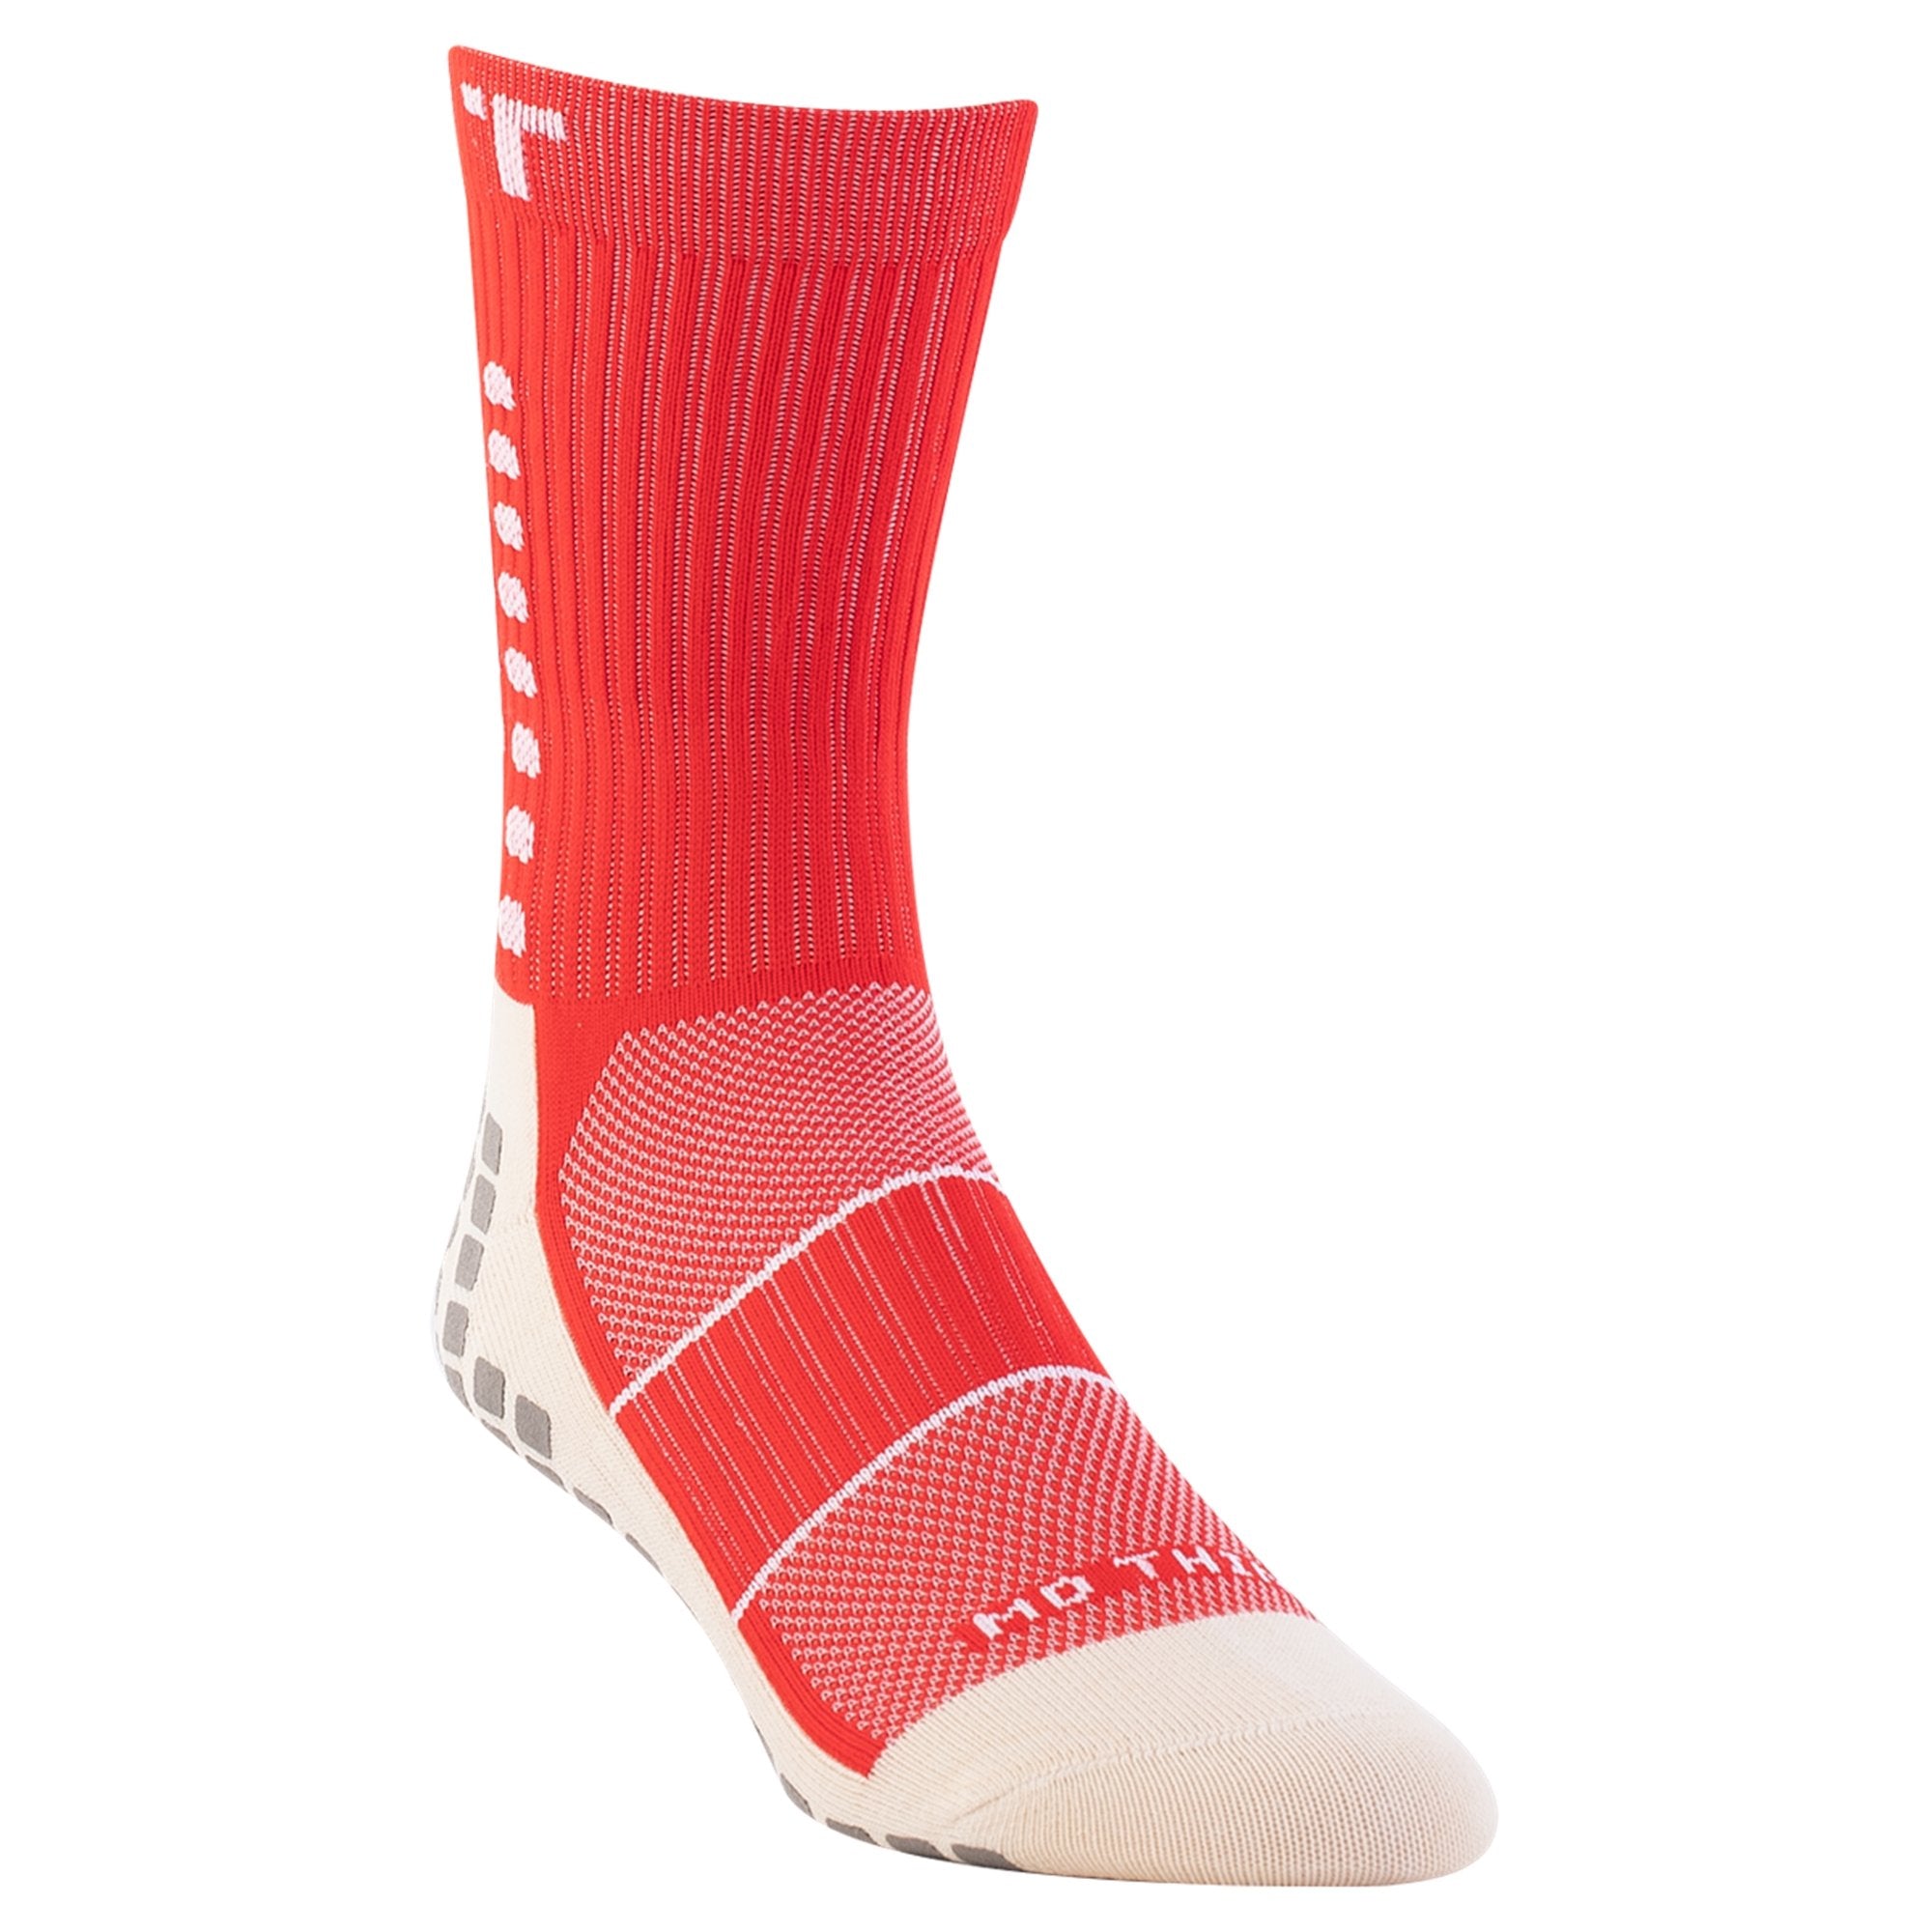 Trusox 3.0 Mid Calf White Socks, Large